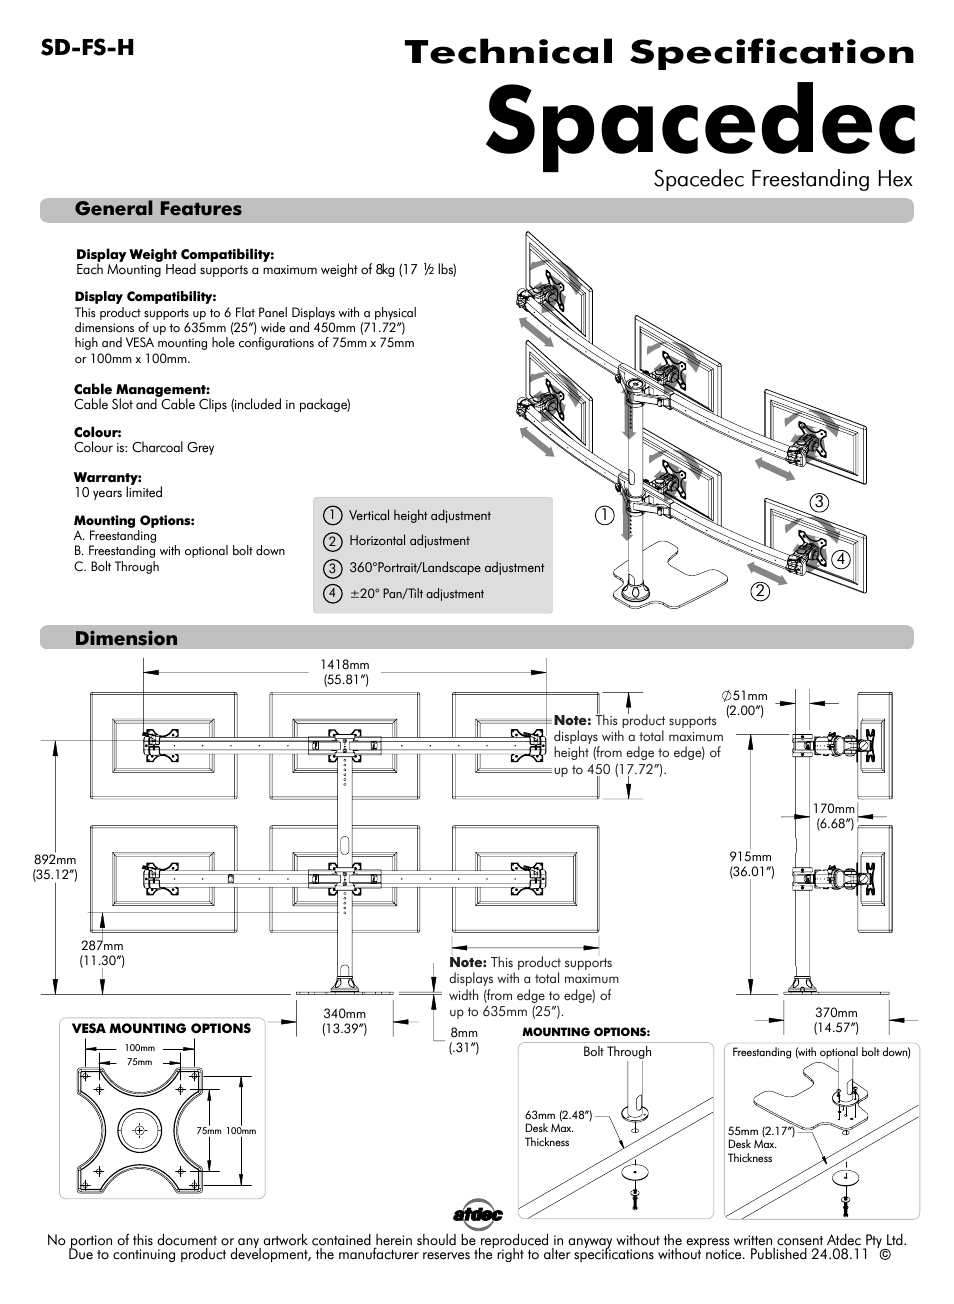 Spacedec SD-FS-H Technical specs